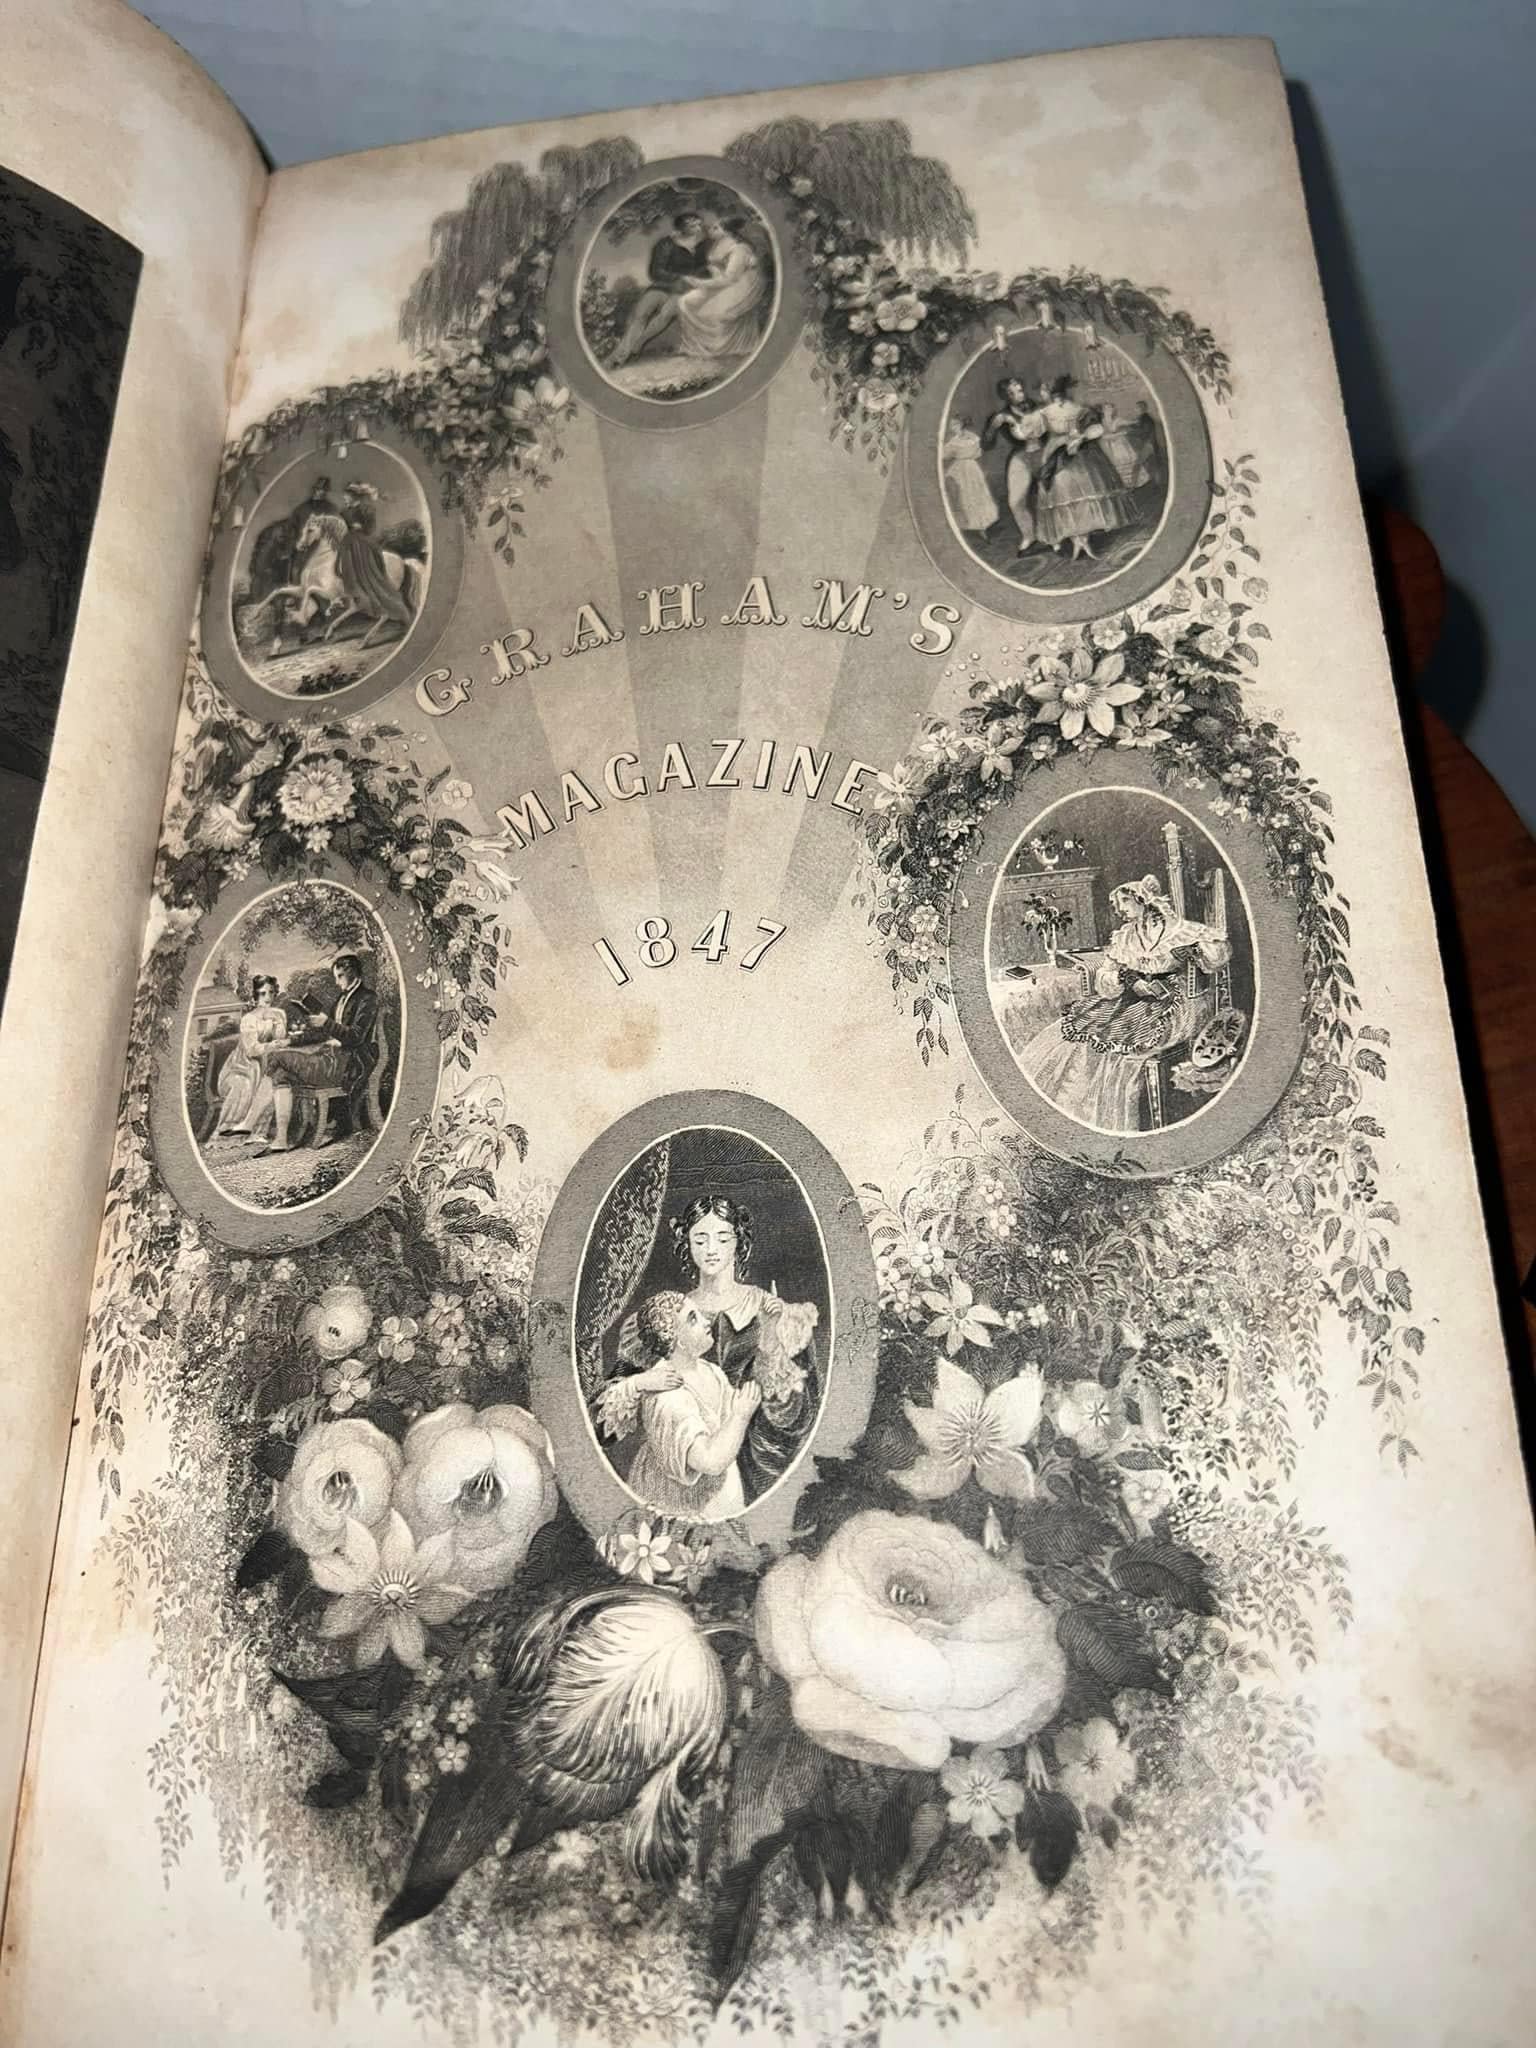 Antique Victorian 1847 - graham’s magazine - complete stories poetry women’s fashion plates